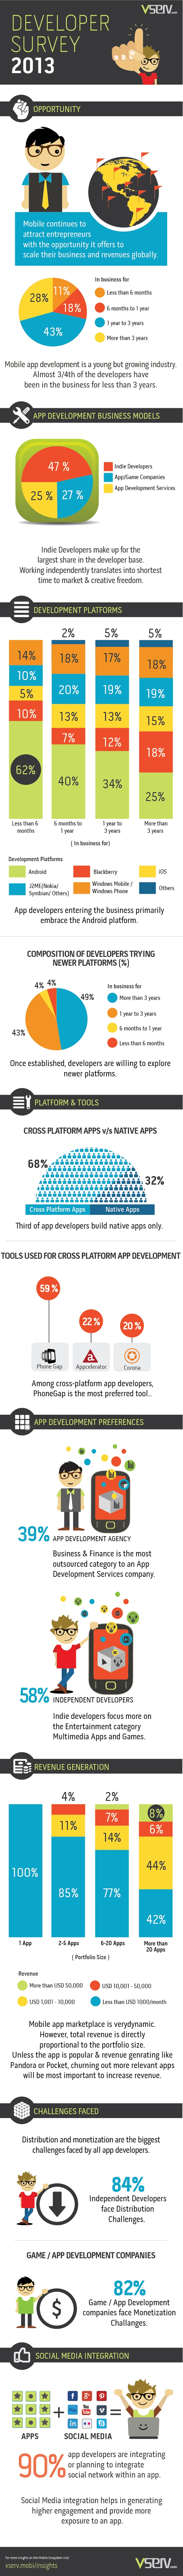 App Developer Survey Infographic